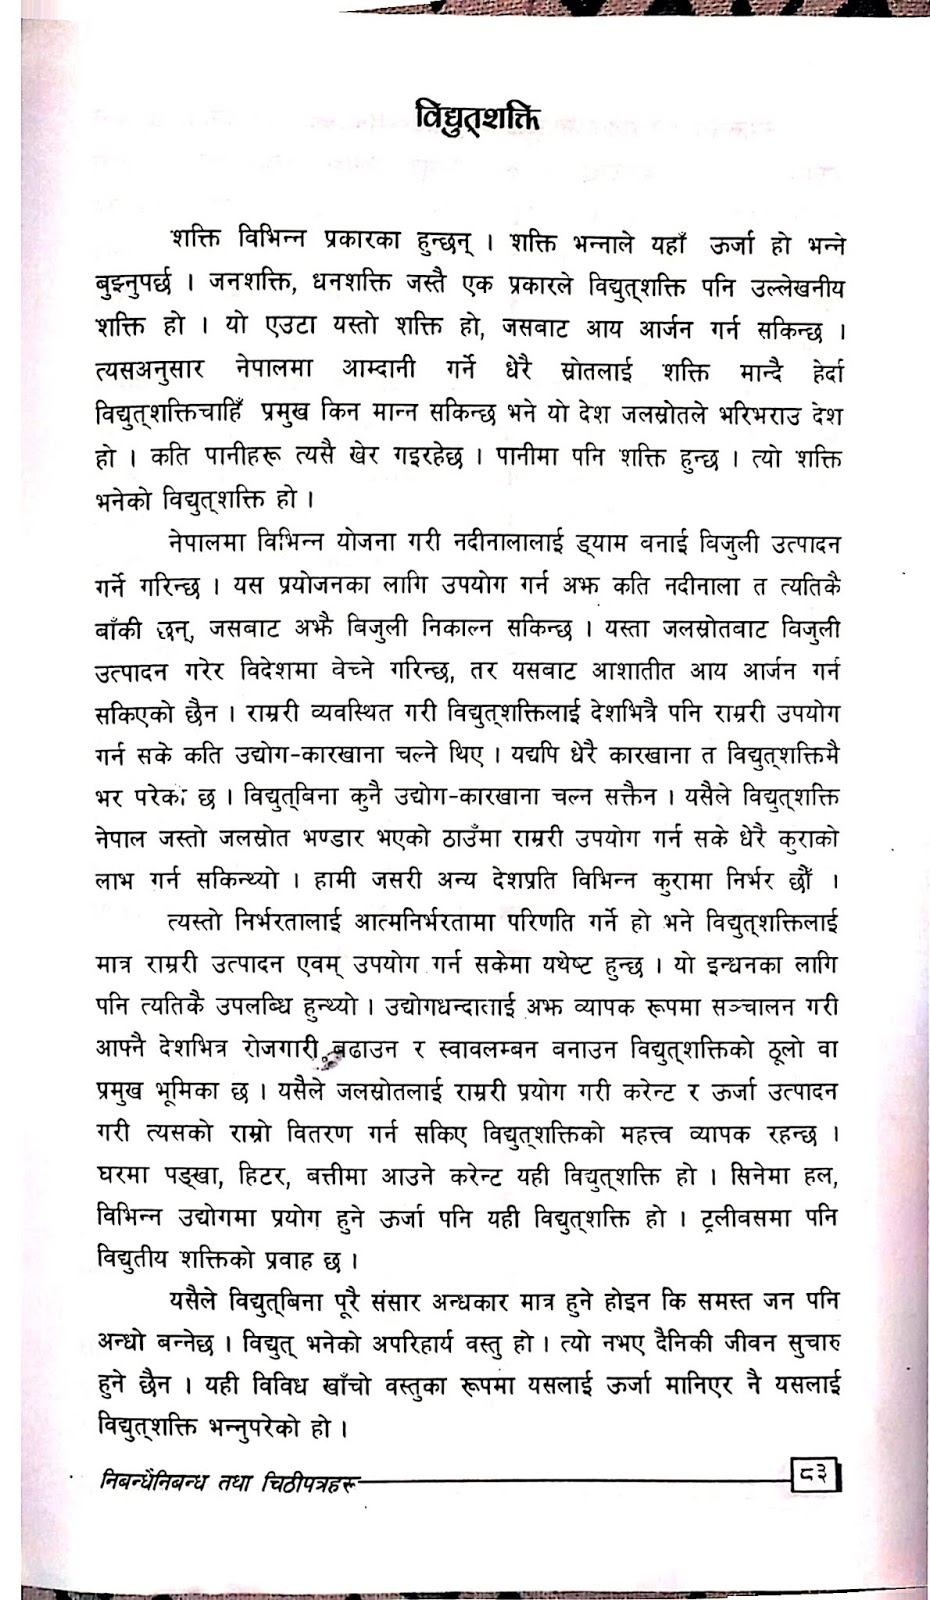 research paper in nepali language